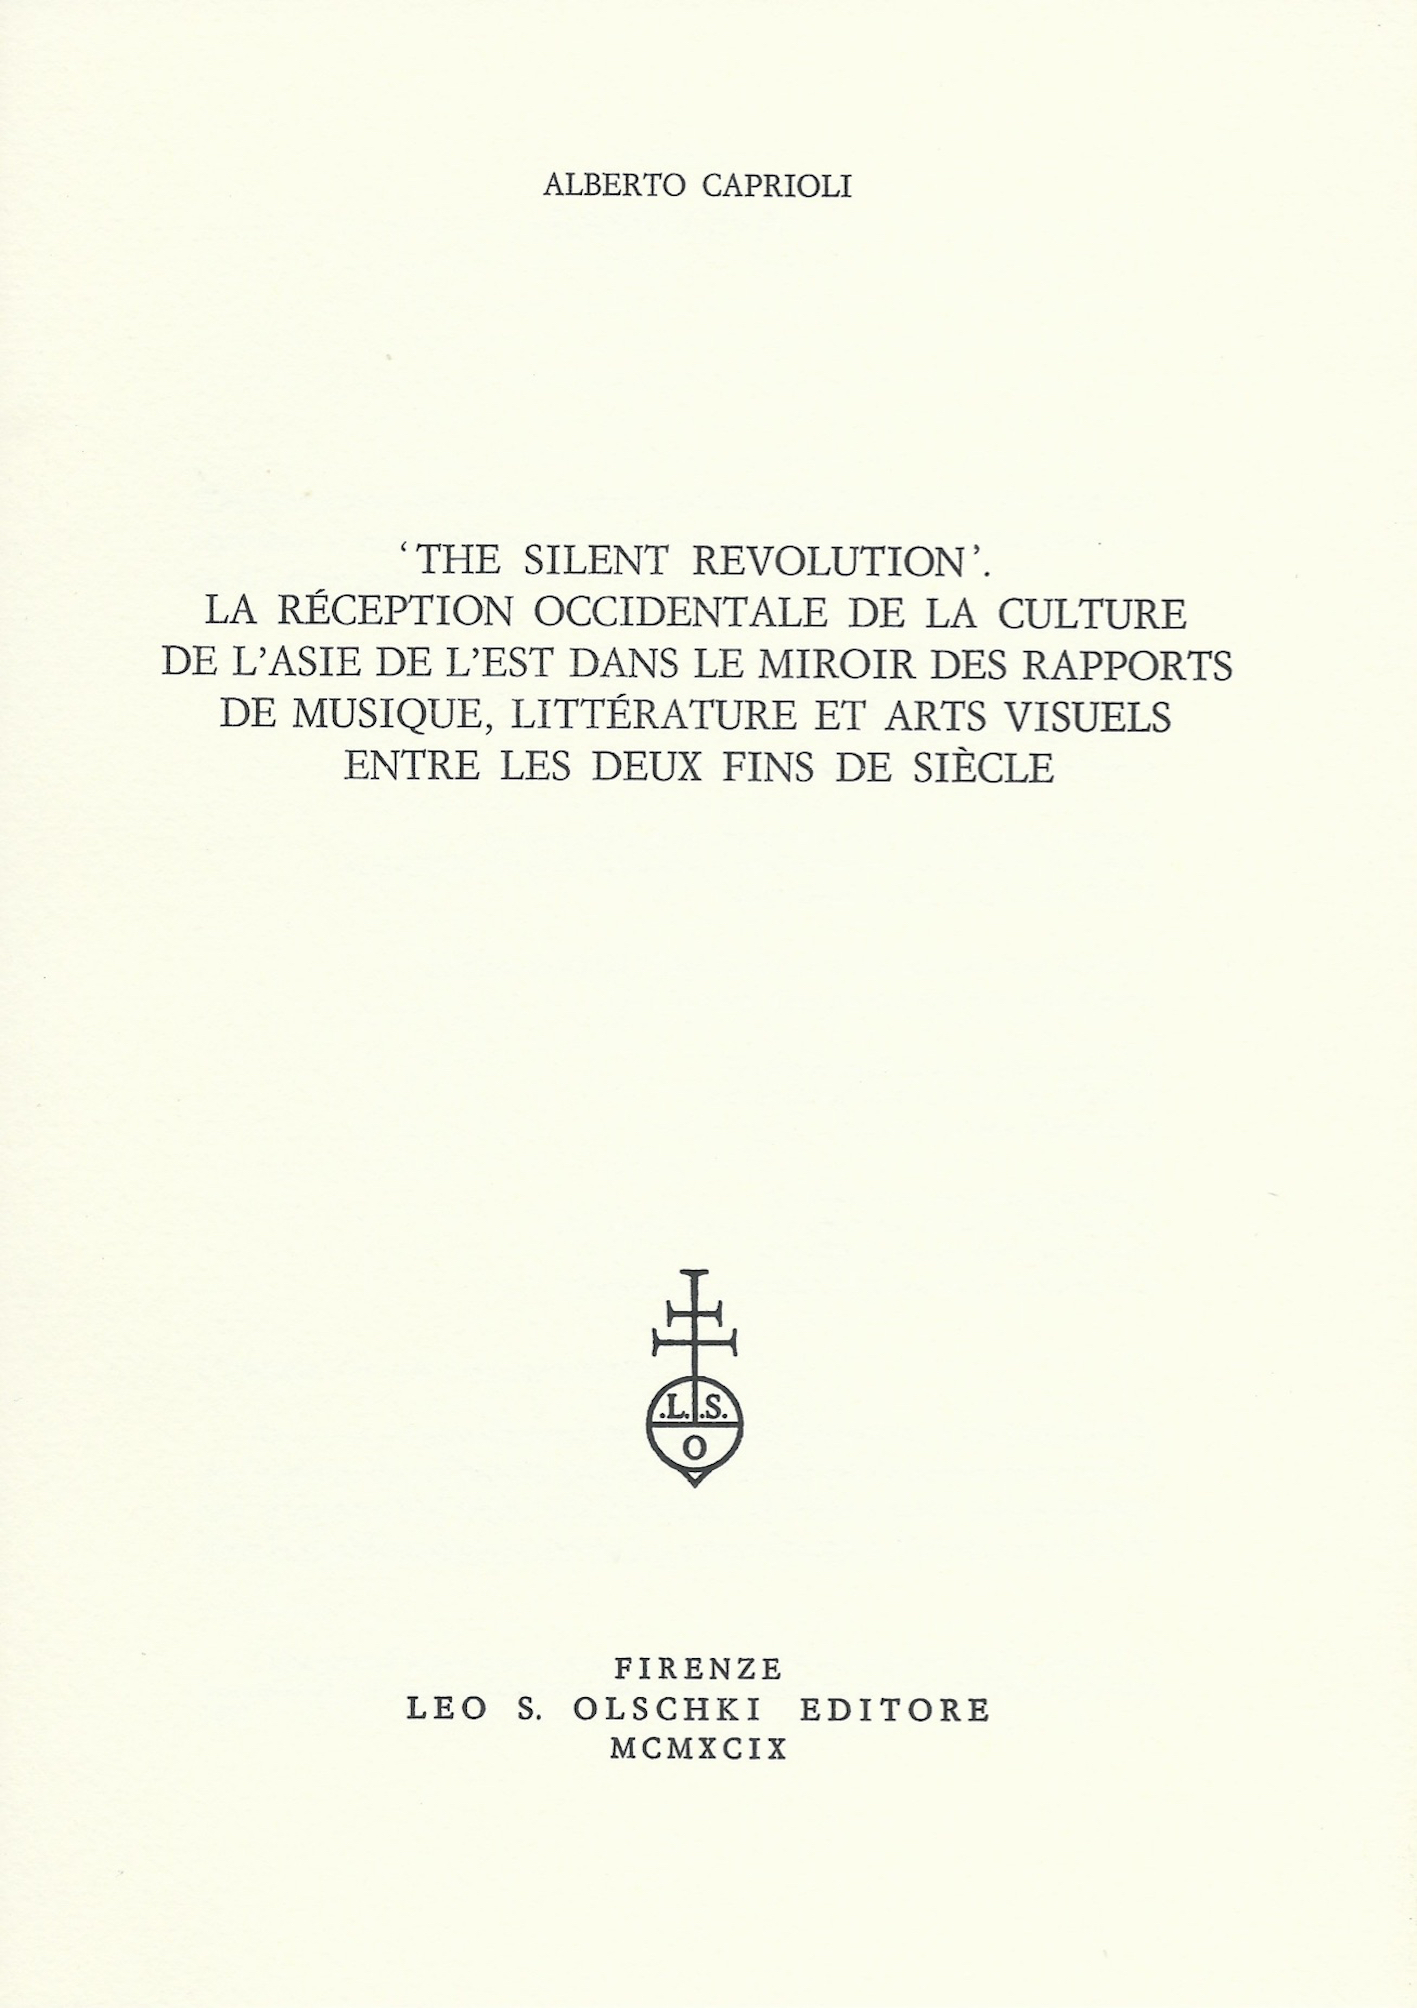 ALBERTO CAPRIOLI, THE SILENT REVOLUTION